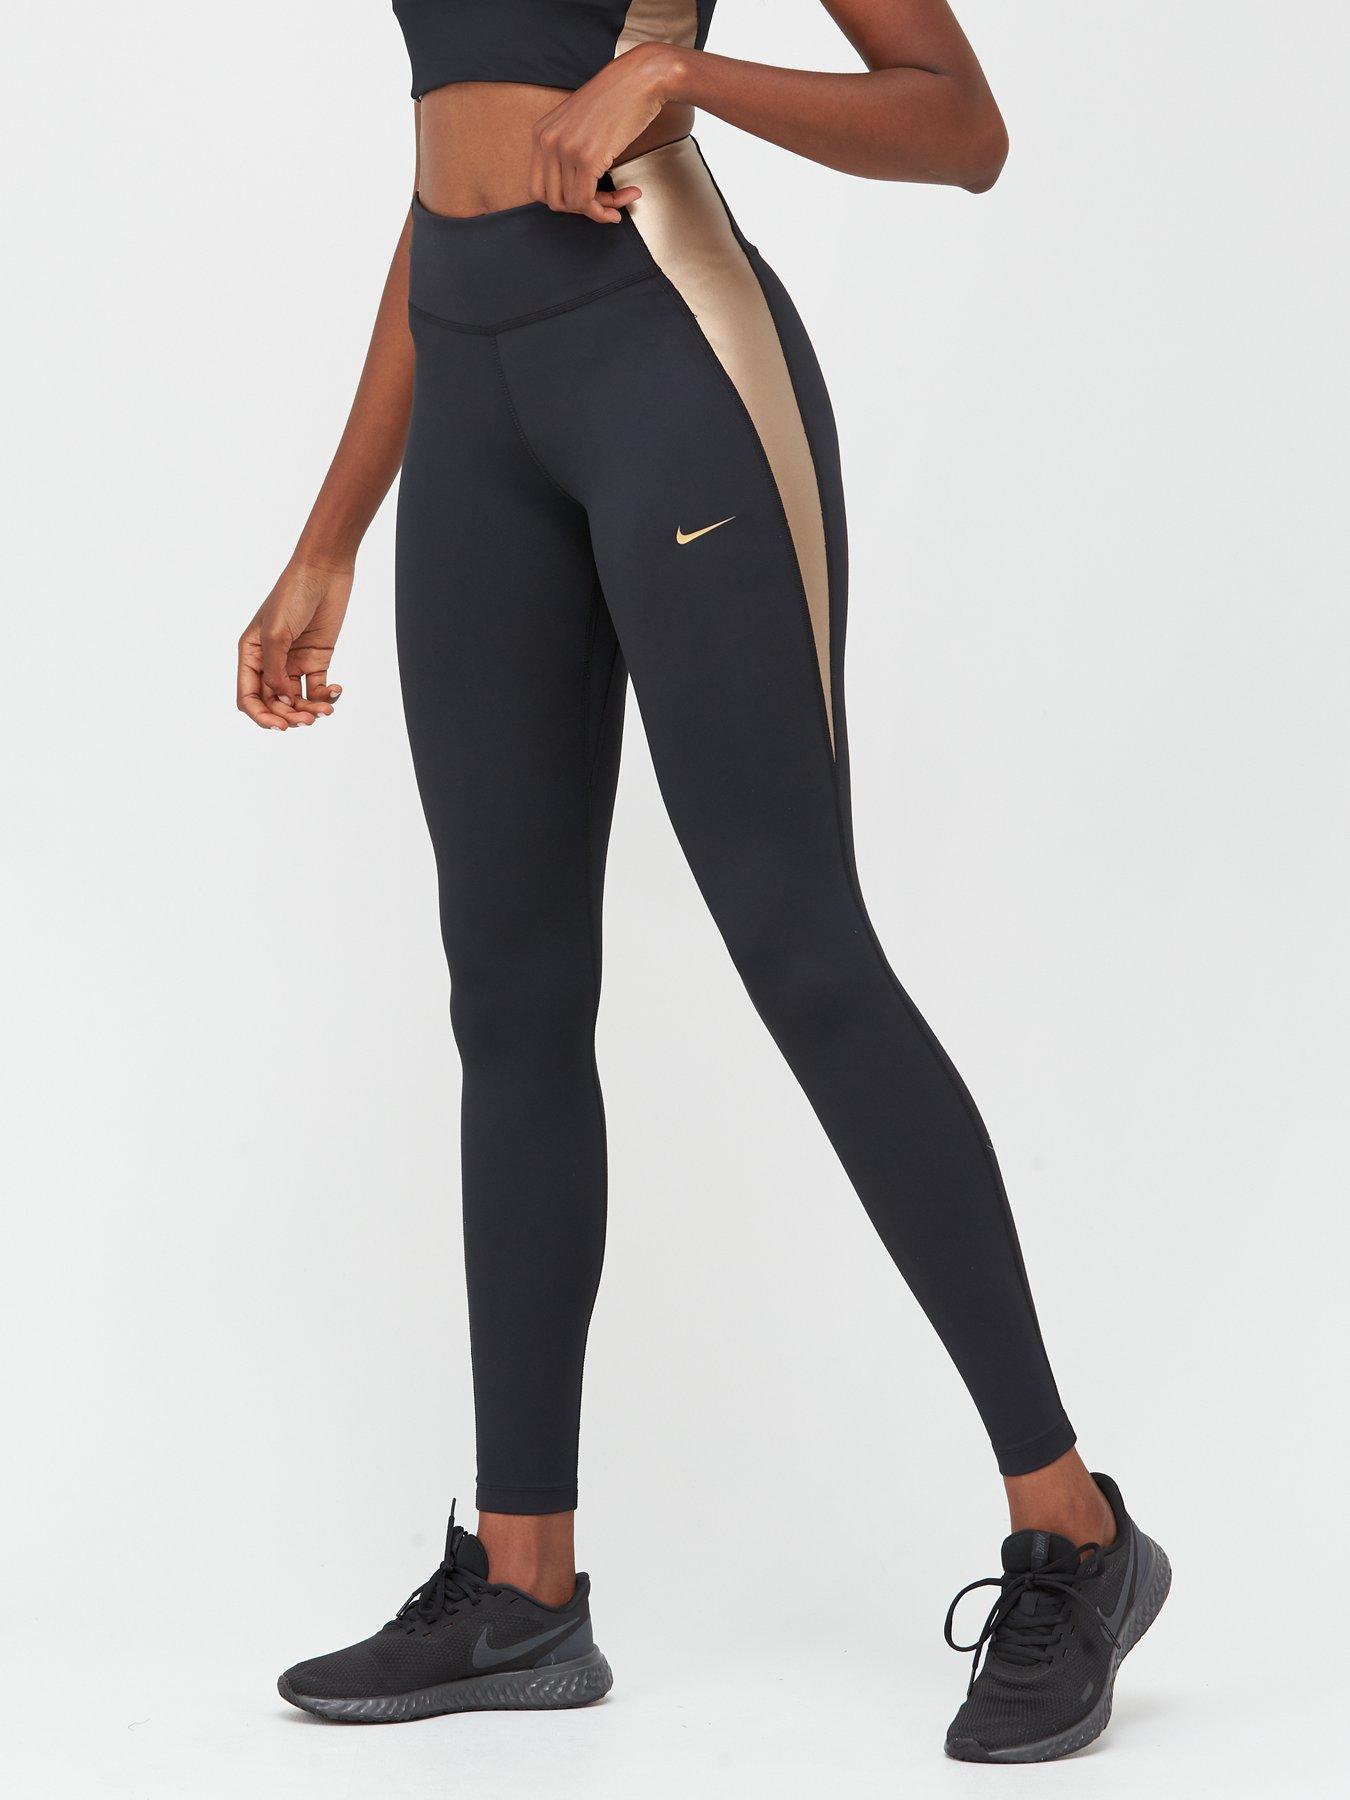 Nike The One Colourblock Leggings - Black/Gold | very.co.uk